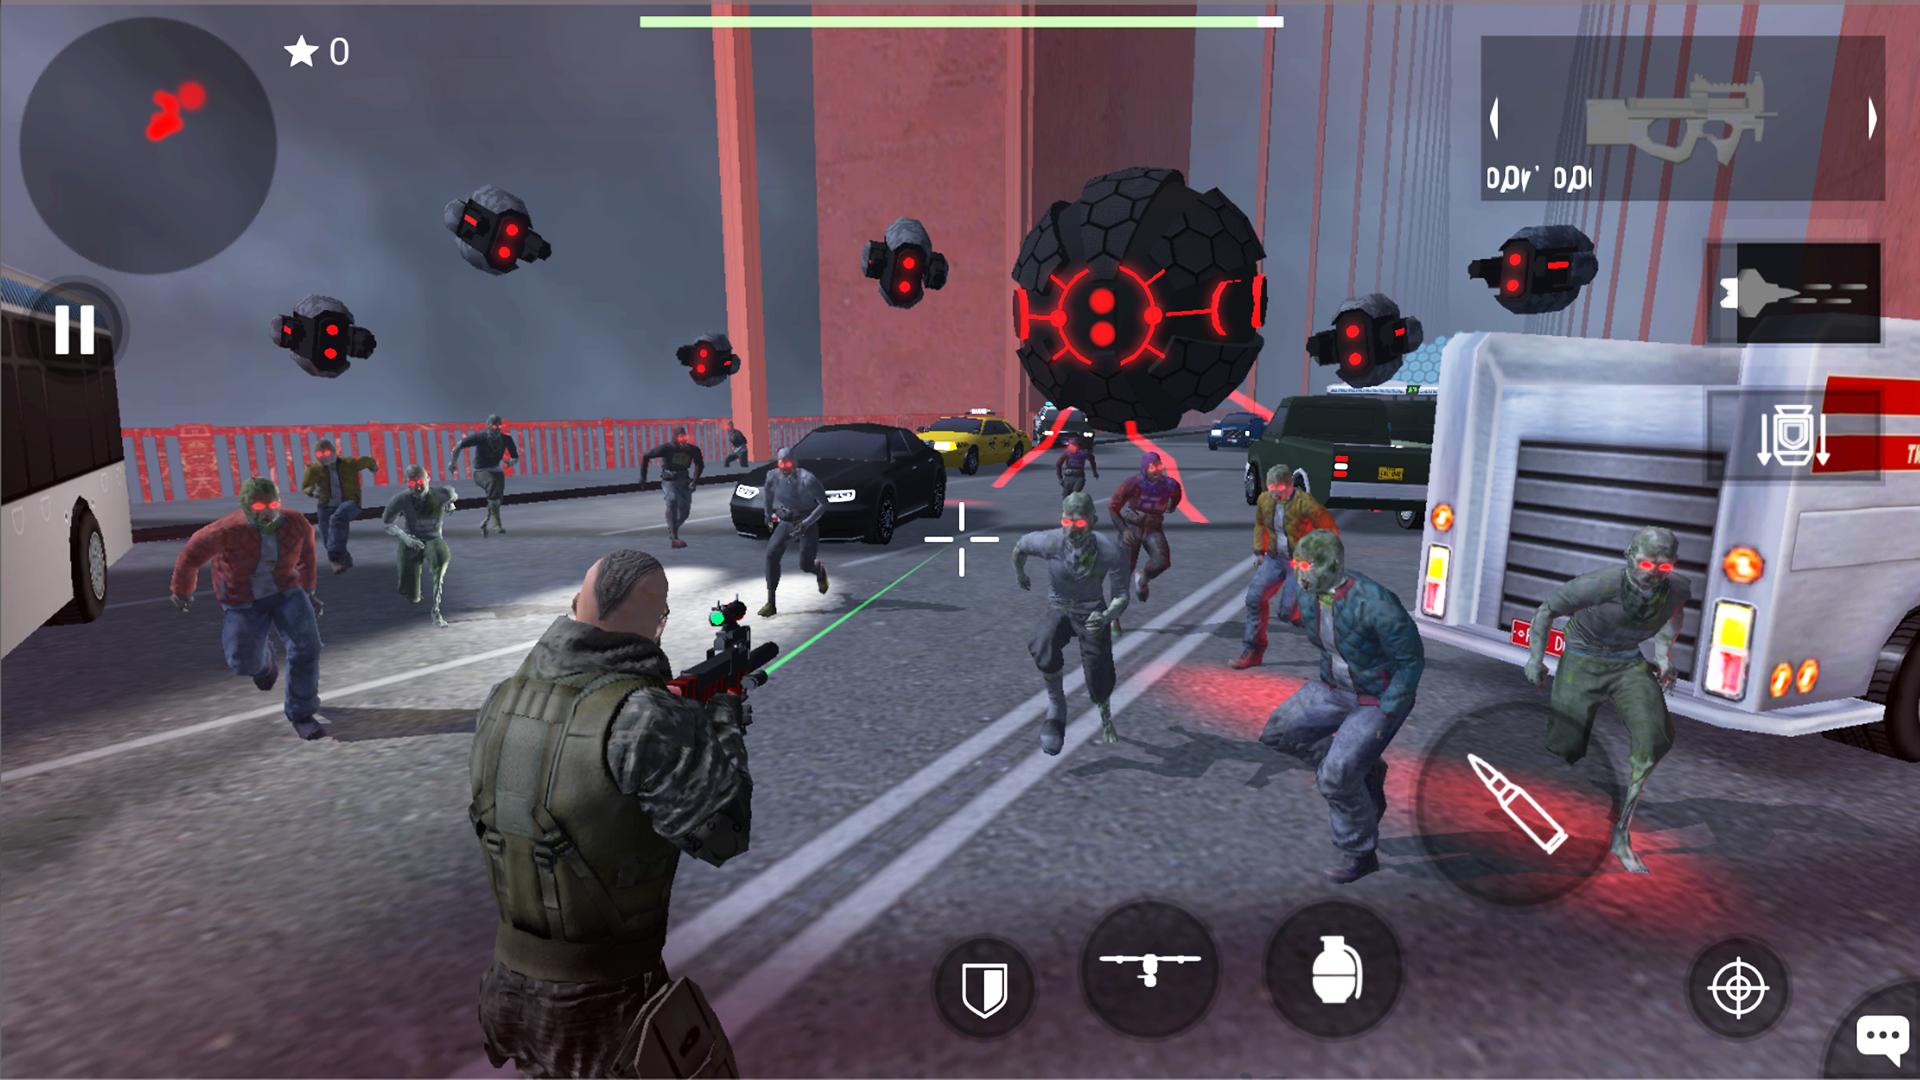 Earth Protect Squad Third Person Shooting Game 2.00.32b Screenshot 10